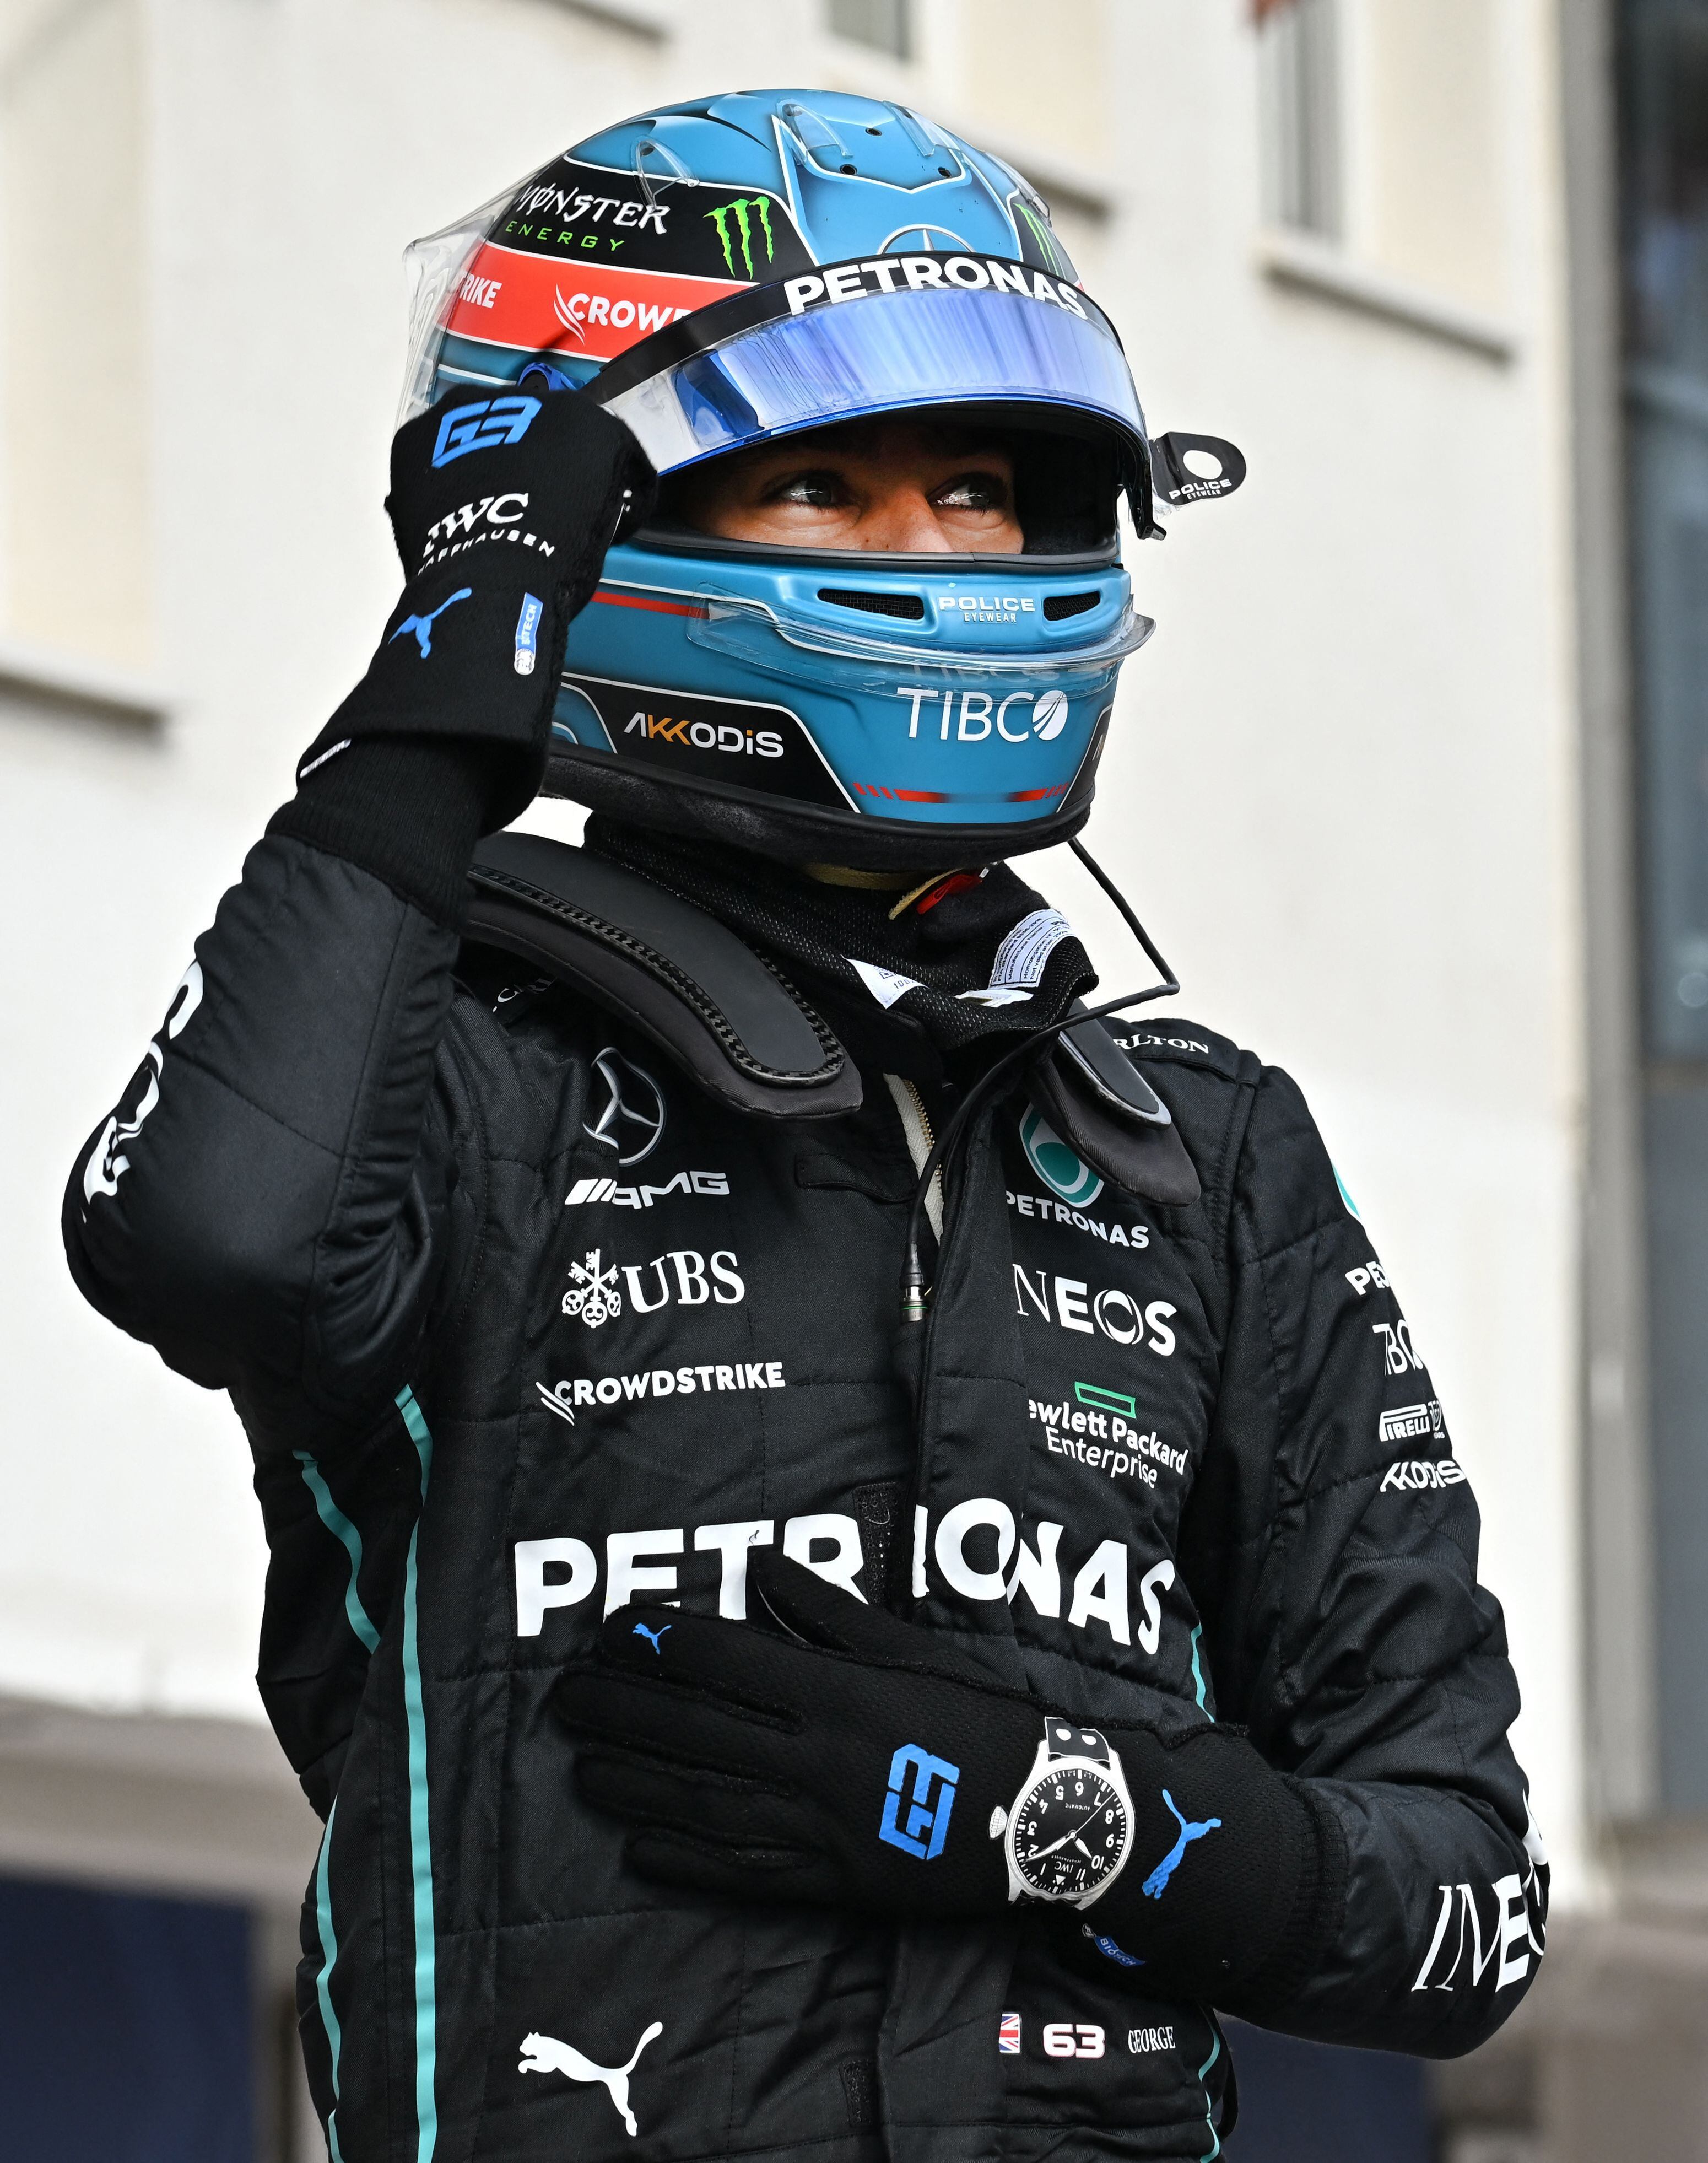 Figurine Pop Formule 1 (F1) #6 pas cher : George Russell (Mercedes